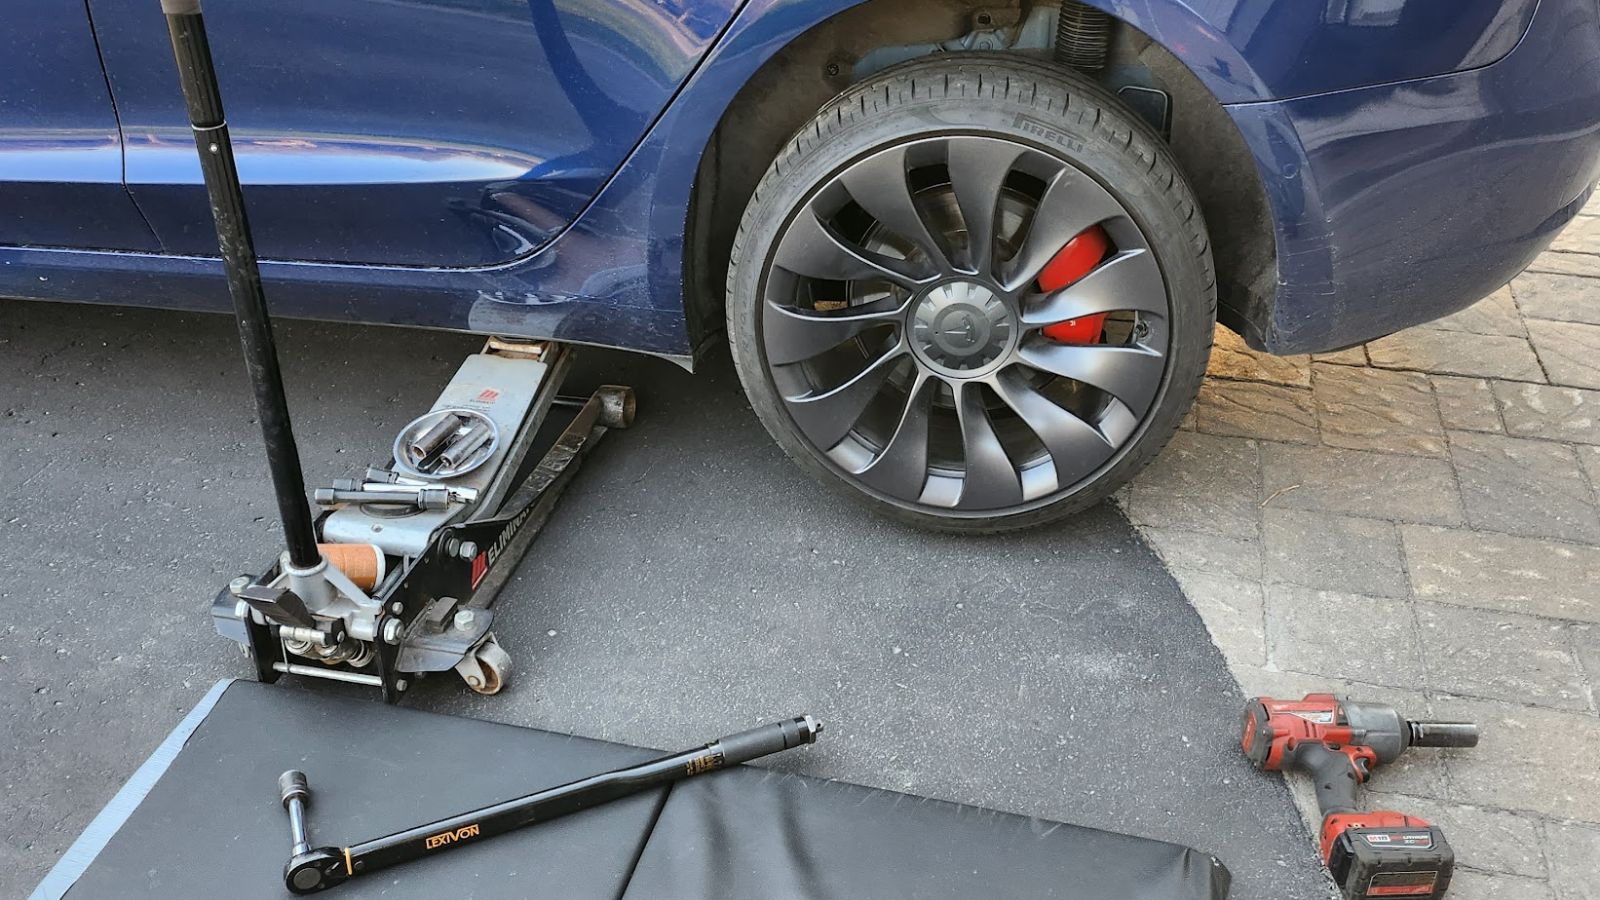 Tesla Flat Tire Assistance Service by Sparky Express, changing a flat tire on a Tesla.